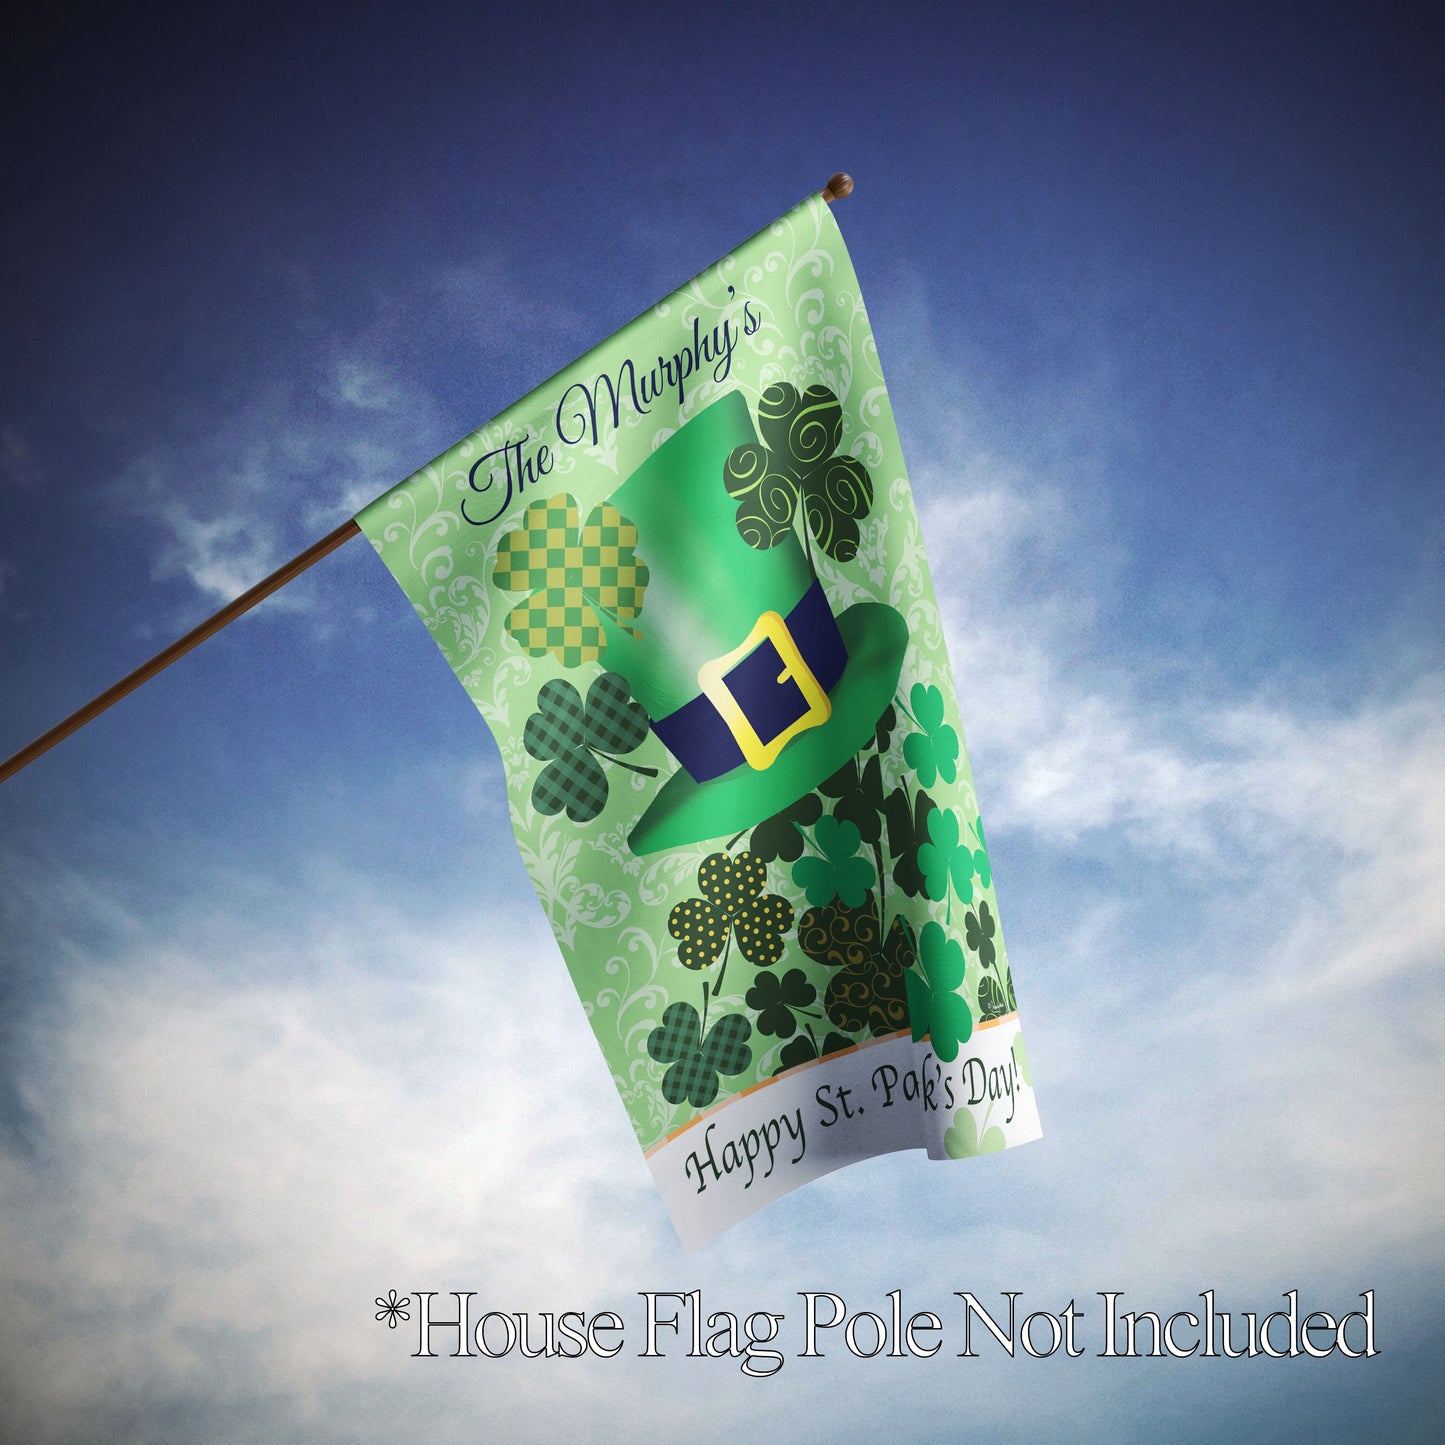 St. Patricks Day Irish Hat Personalized House Flag - St. Patrick's Day Garden Flag - St. Patrick's Day Decorative Flags